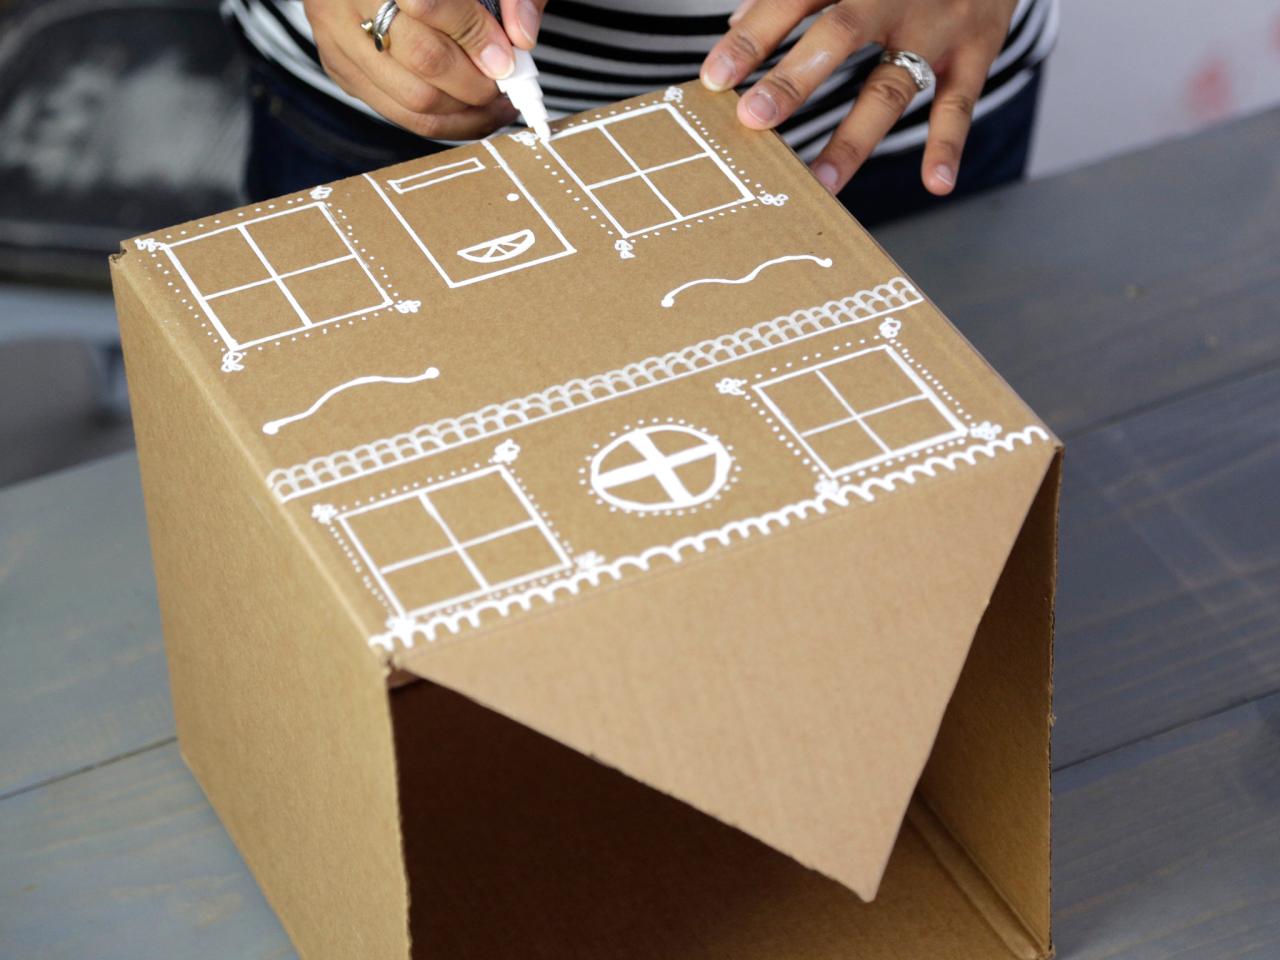 DIY Gingerbread House Gift Boxes | HGTV's Decorating & Design Blog | HGTV